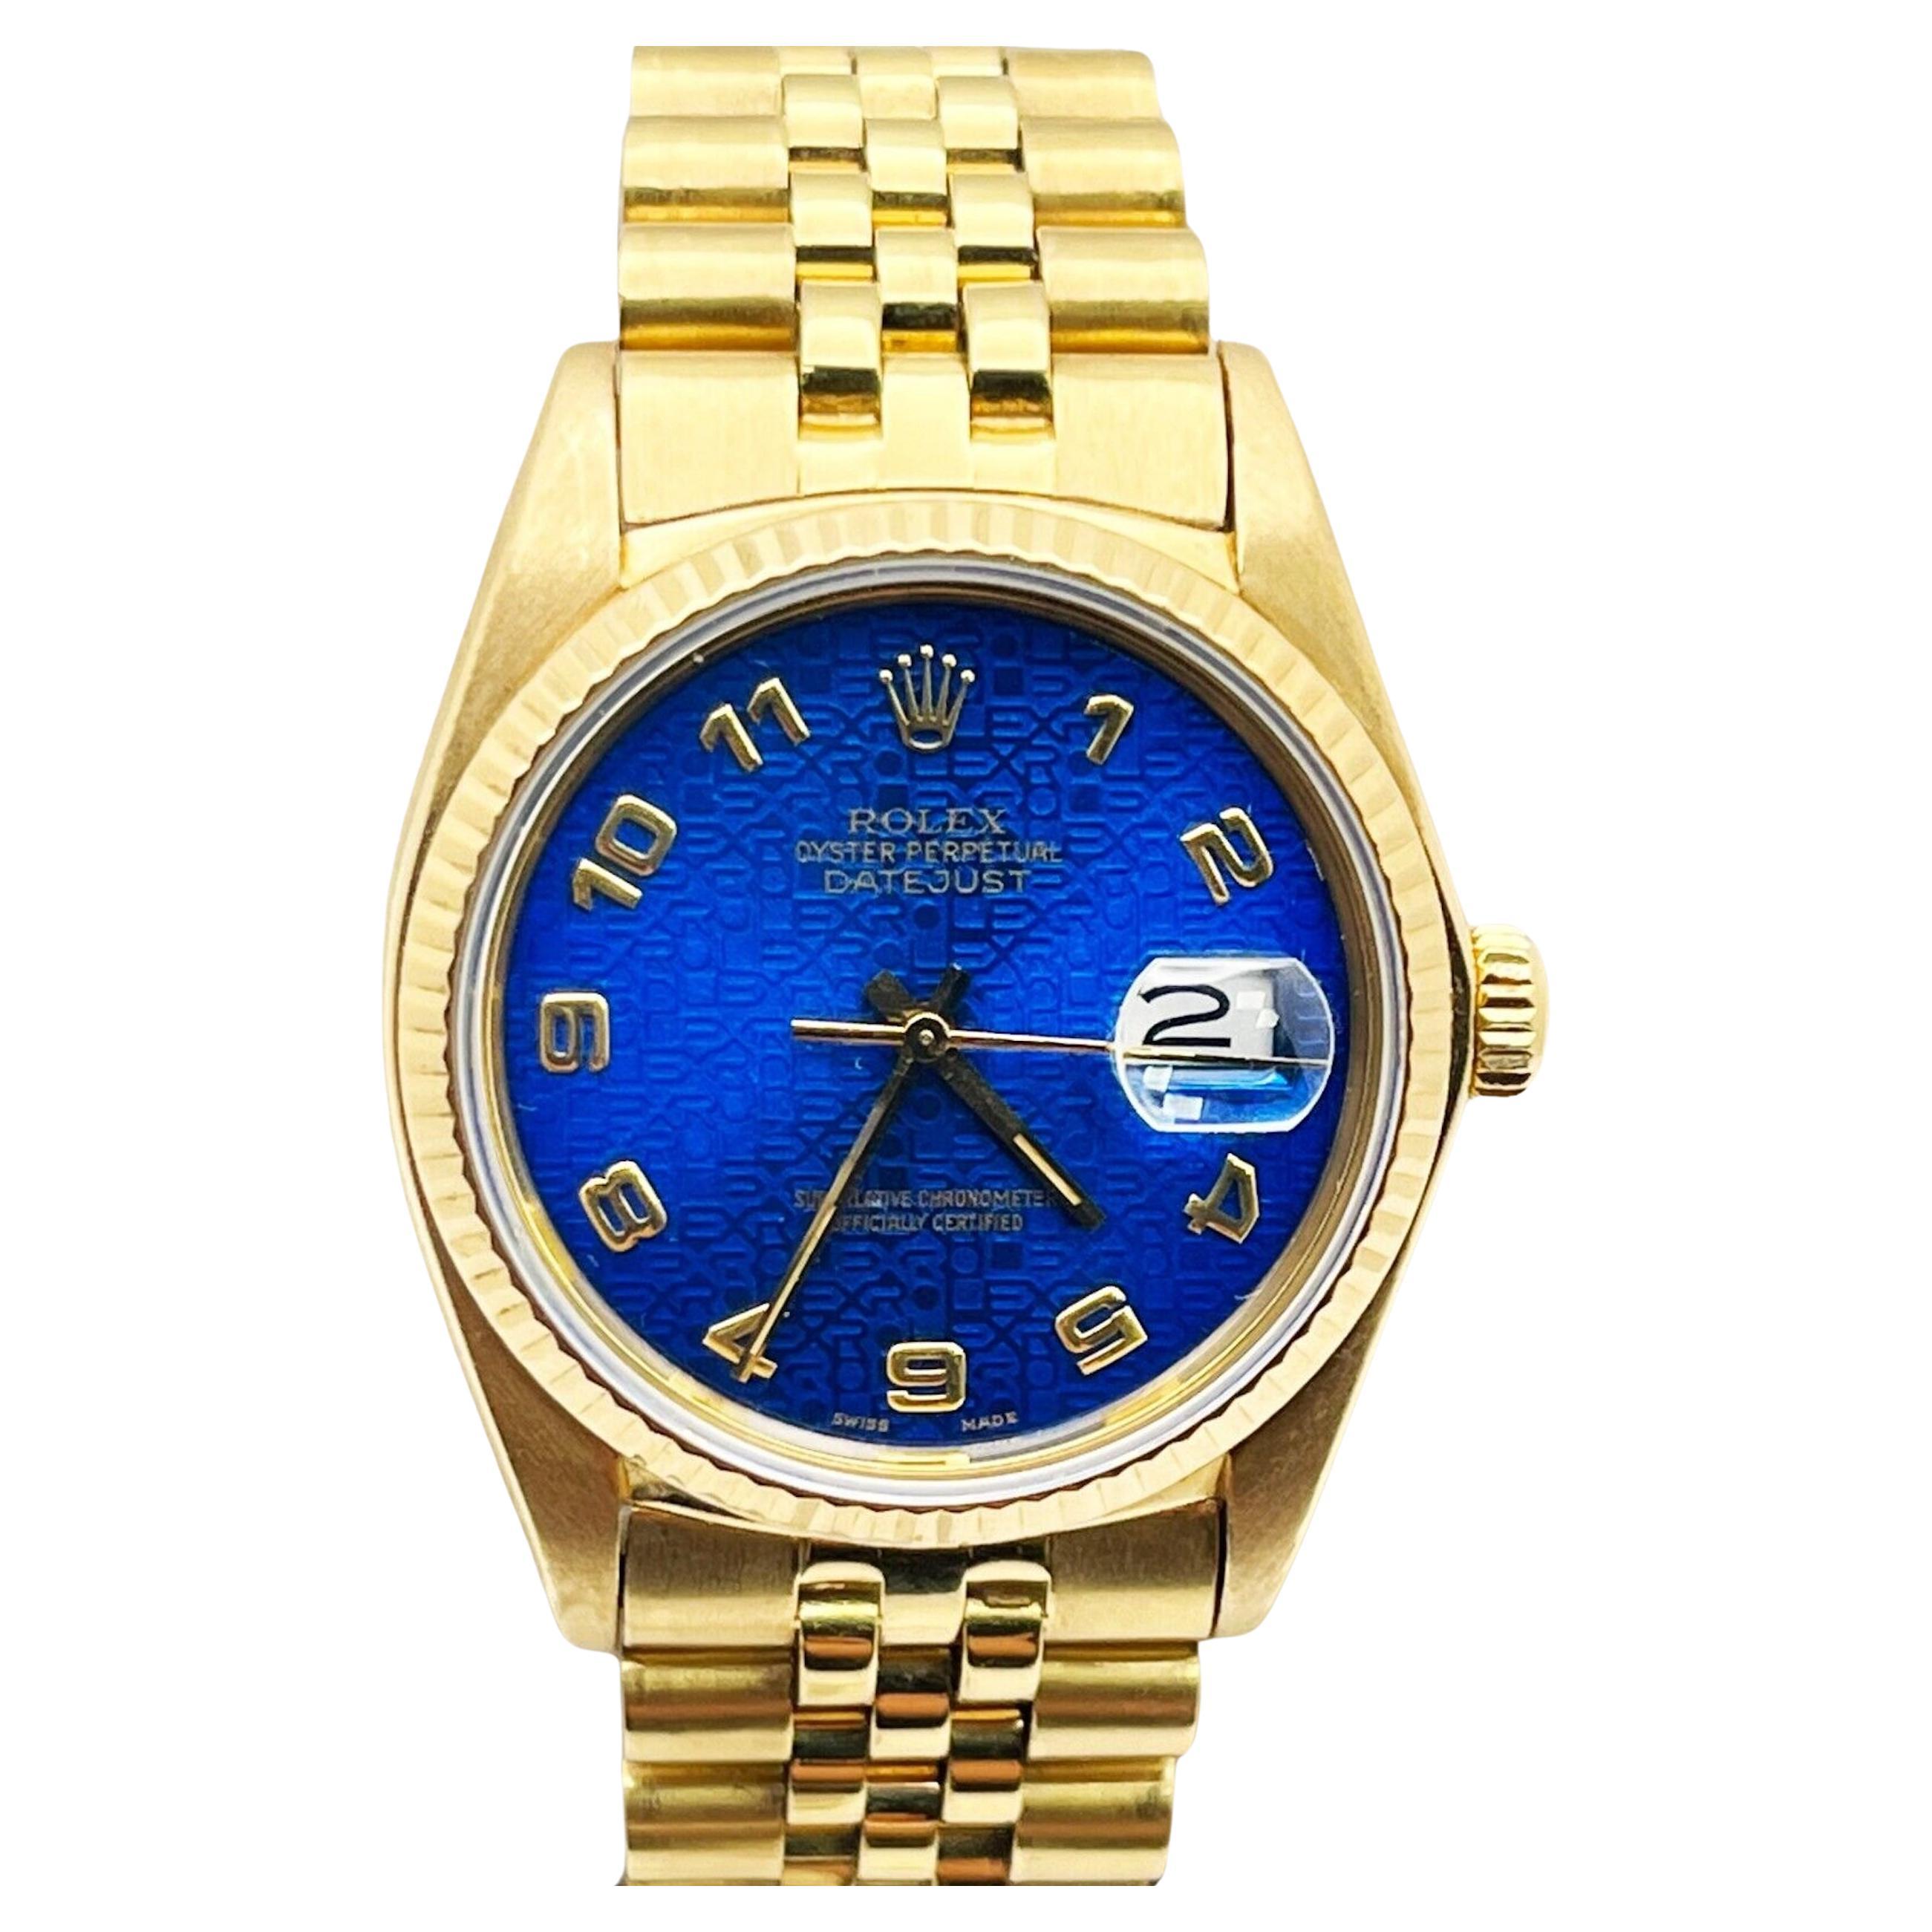 Rolex 16018 Datejust Factory, cadran bleu anniversaire en or jaune 18 carats